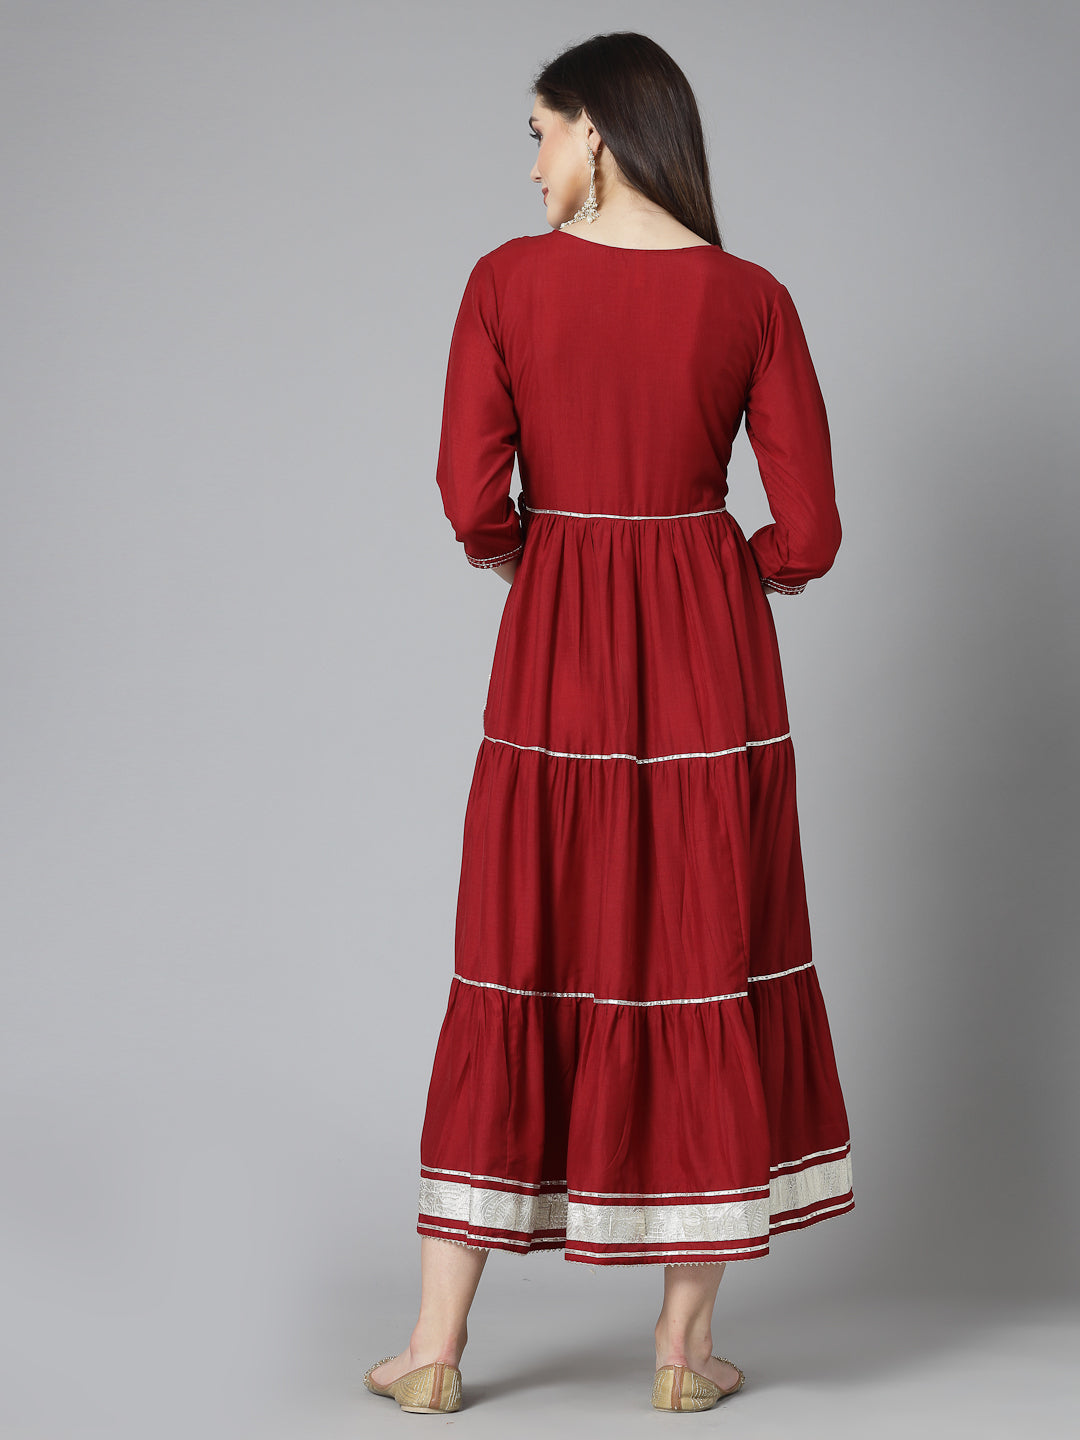 Embroidered & Embellished Silk Blend Tiered Dress Kurta